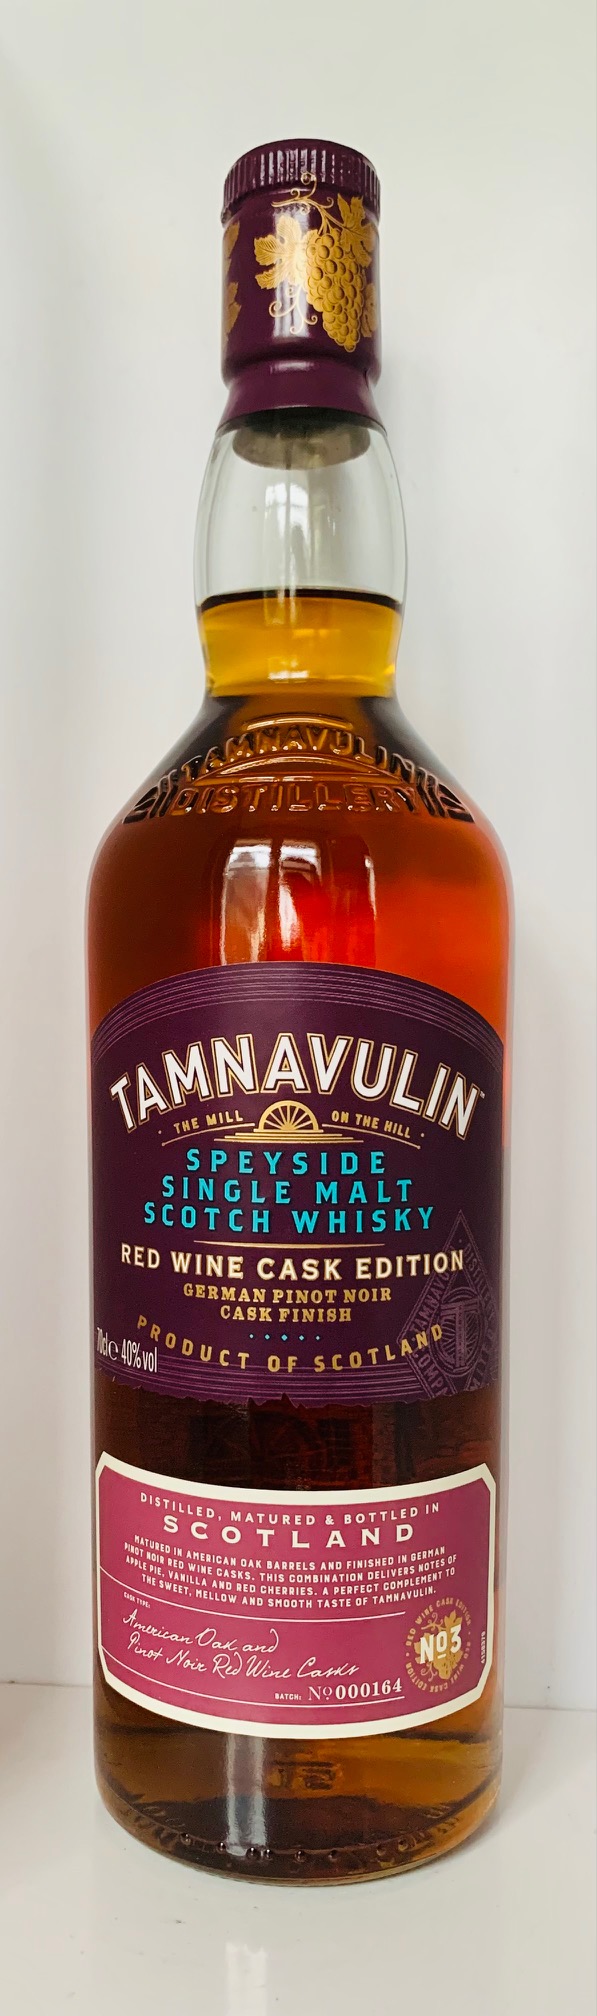 Tamnavulin Red Wine Cask Edition No.3 German Pinot Noir Cask Finish